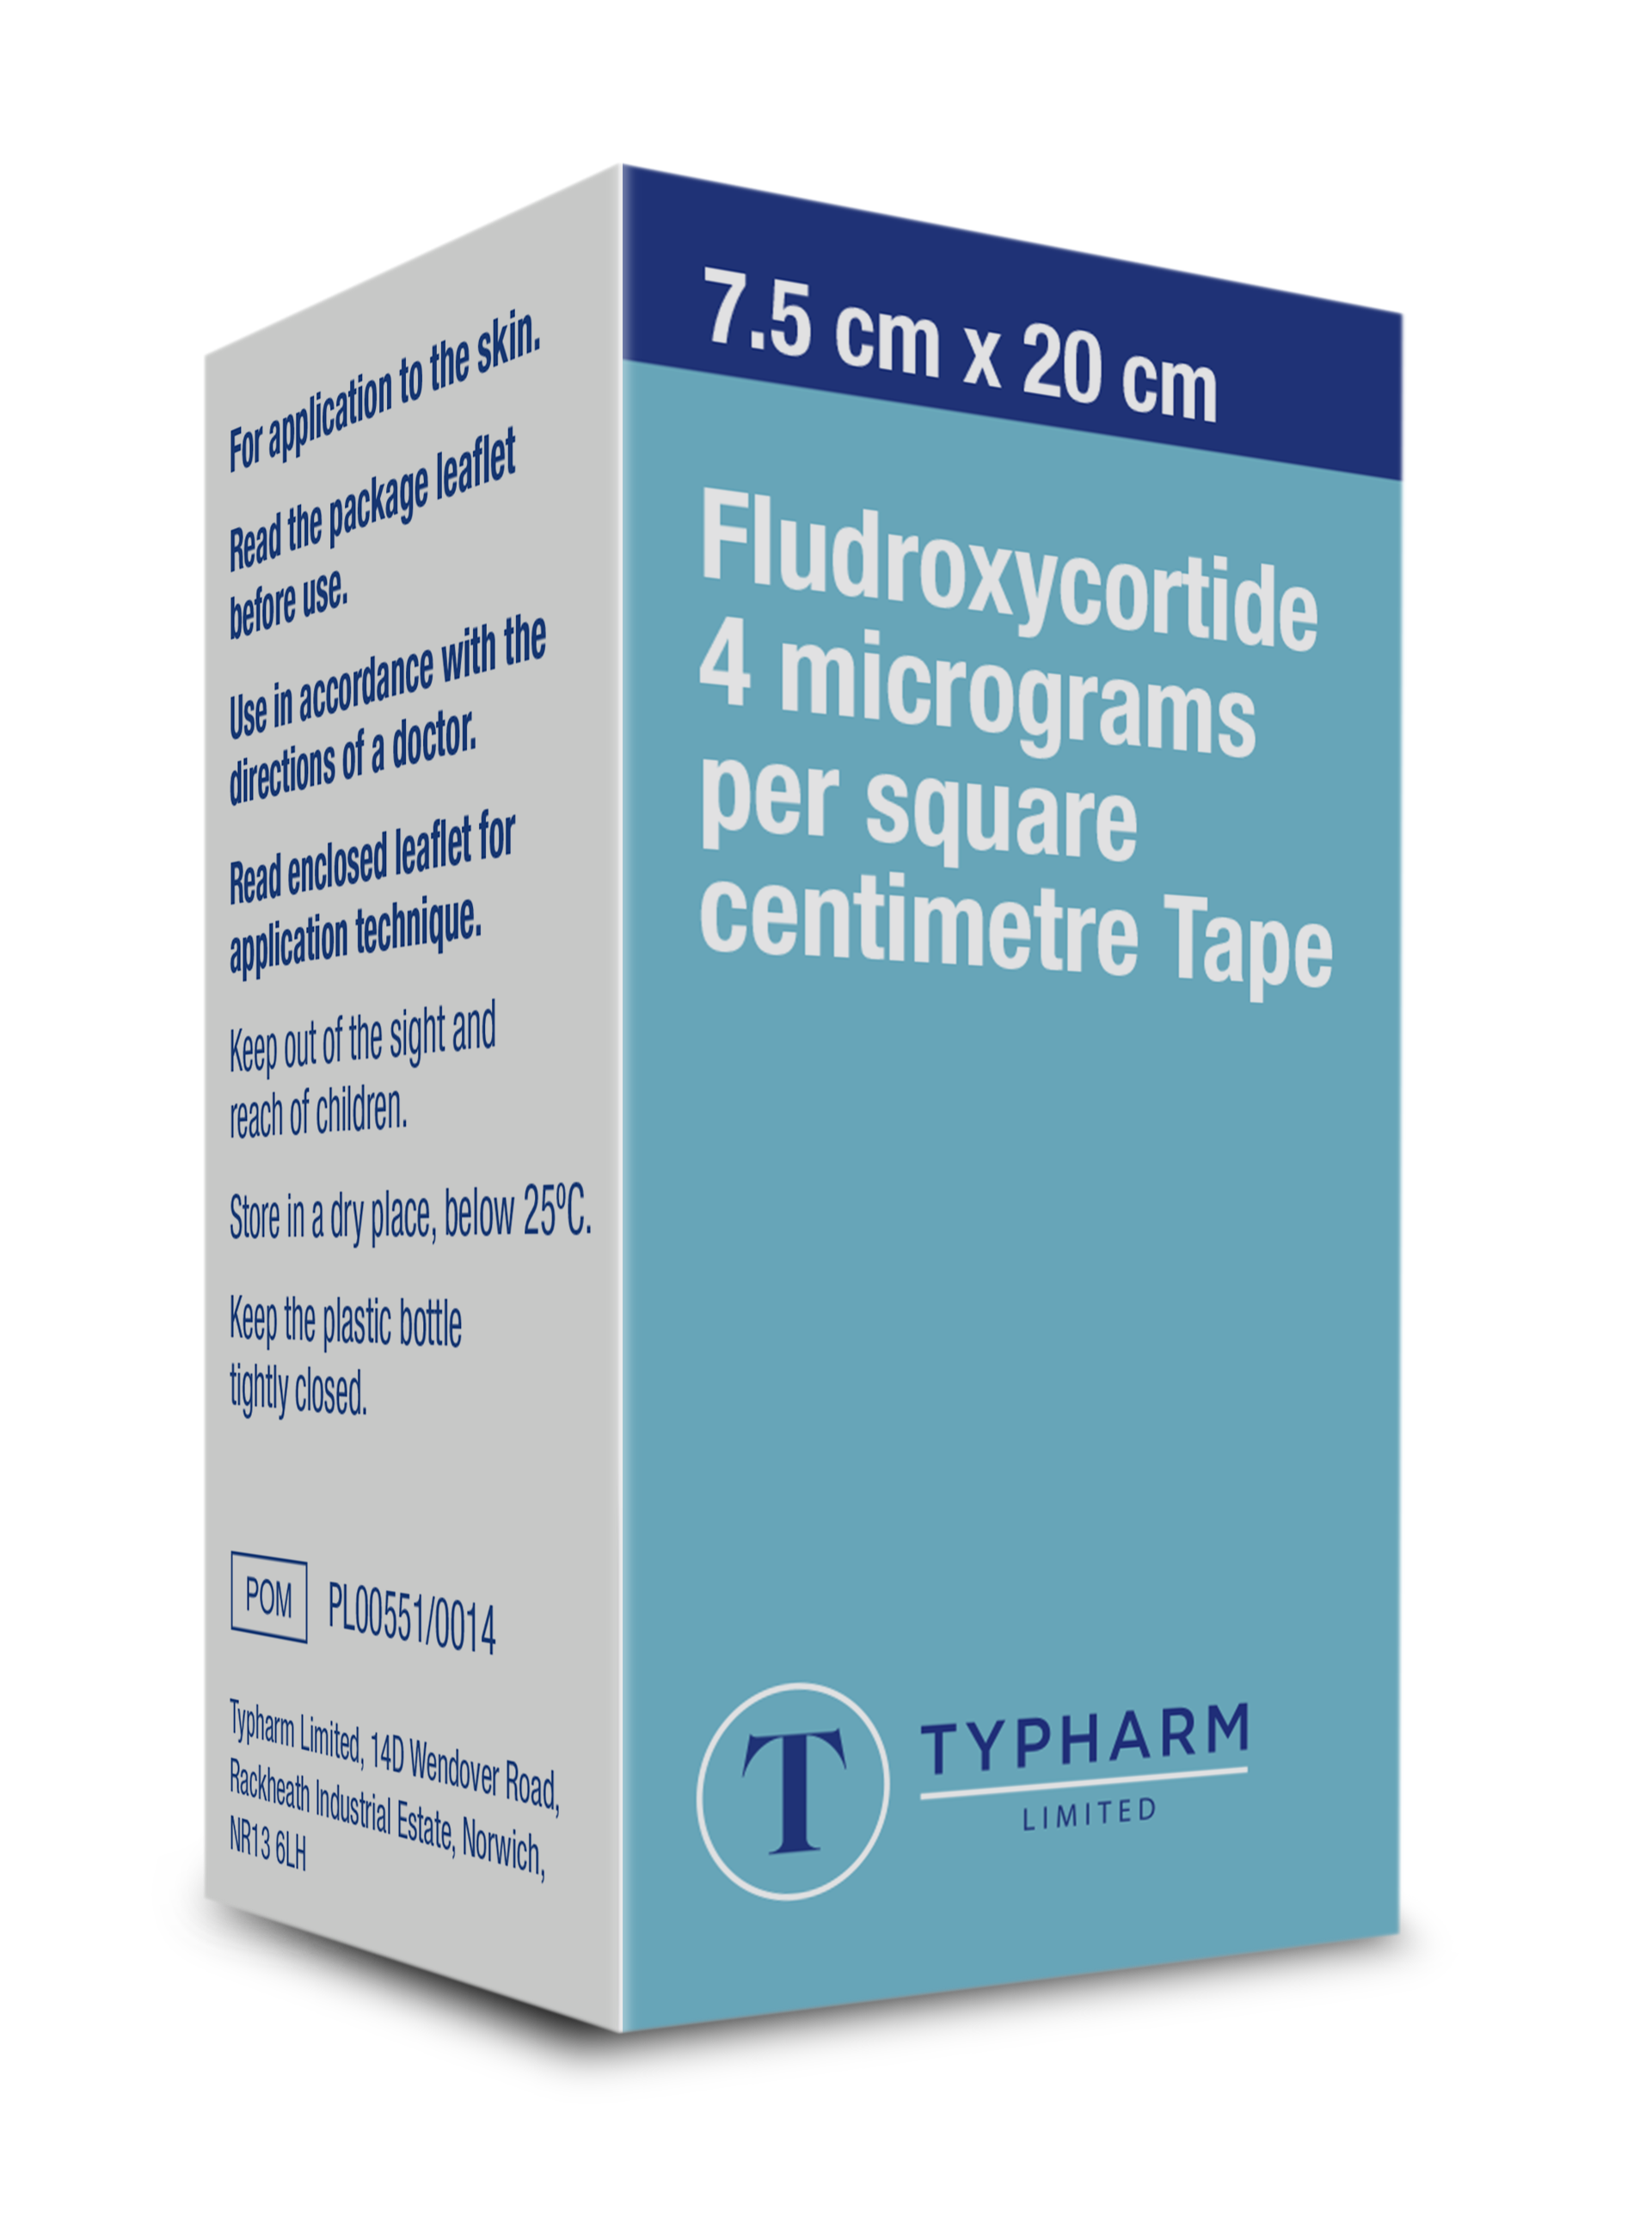 Fludroxycortide 4 µg/cm2 Tape